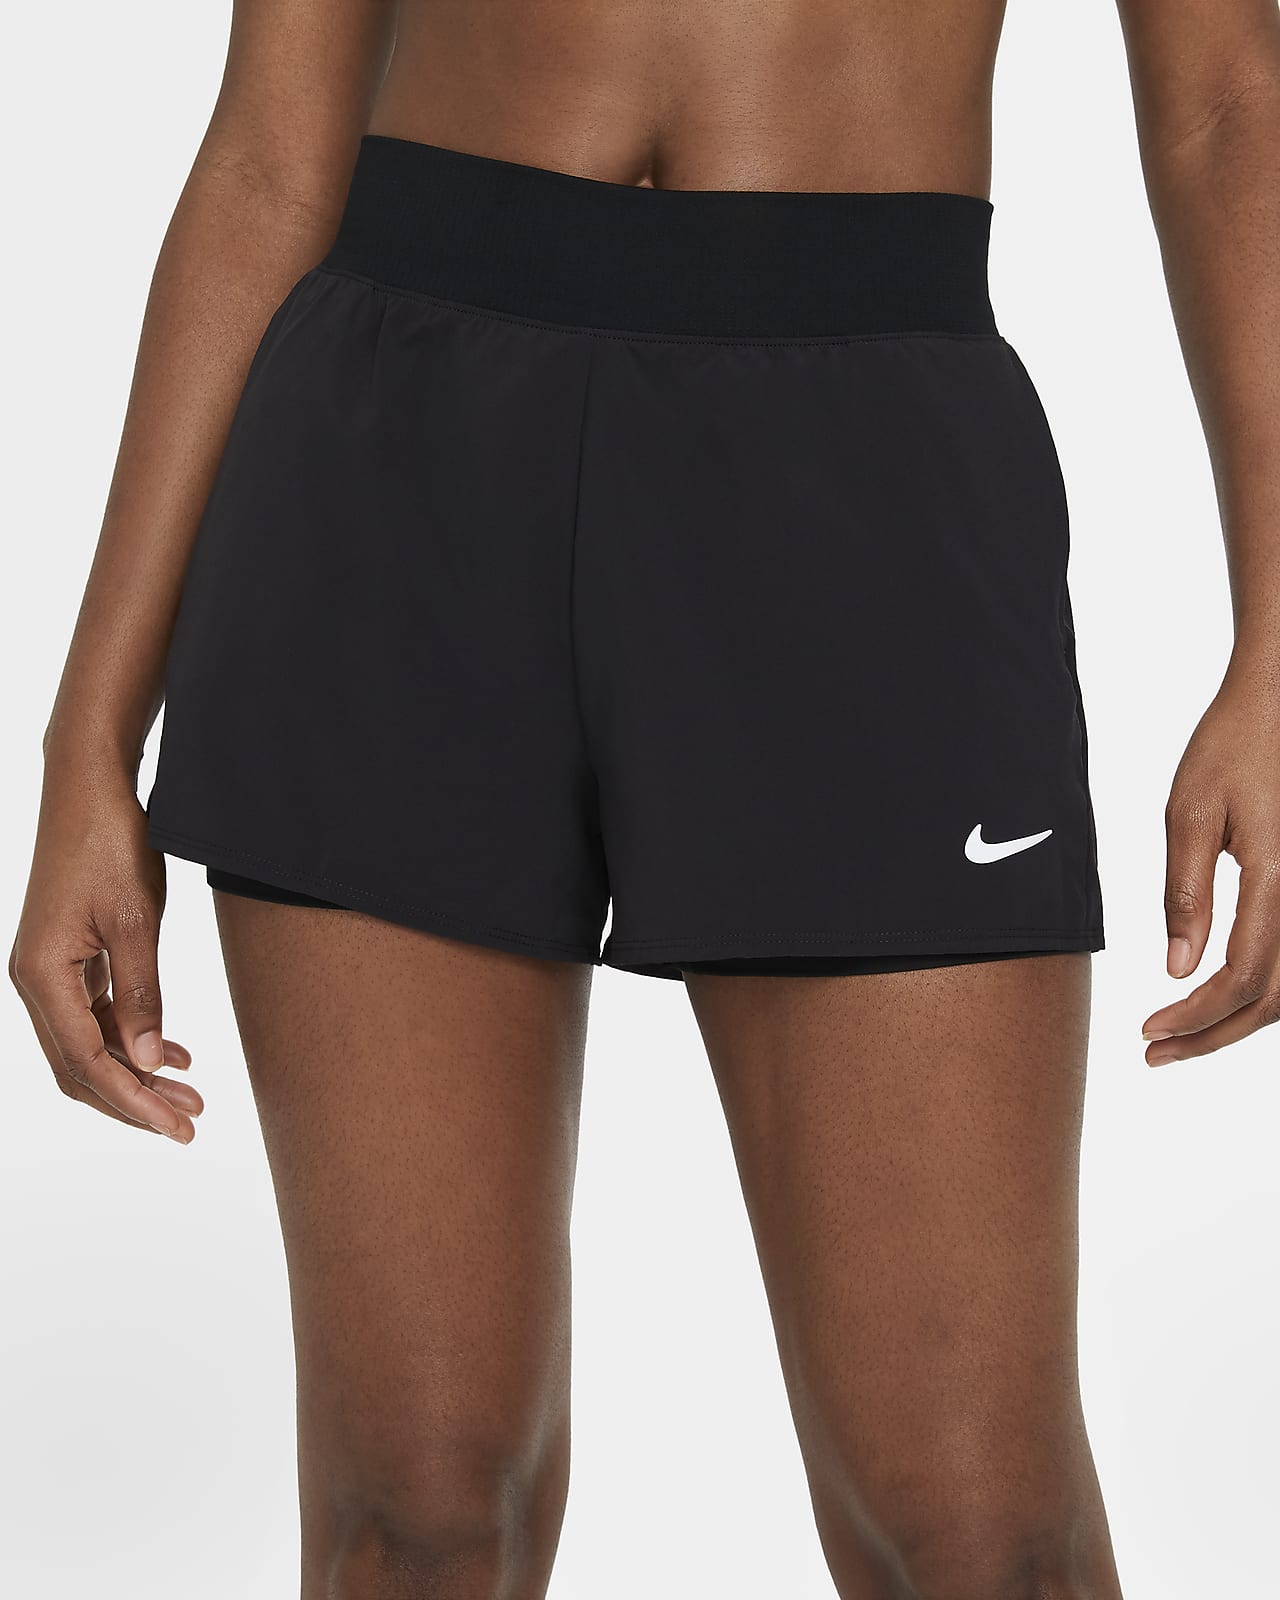 nike tennis shorts black